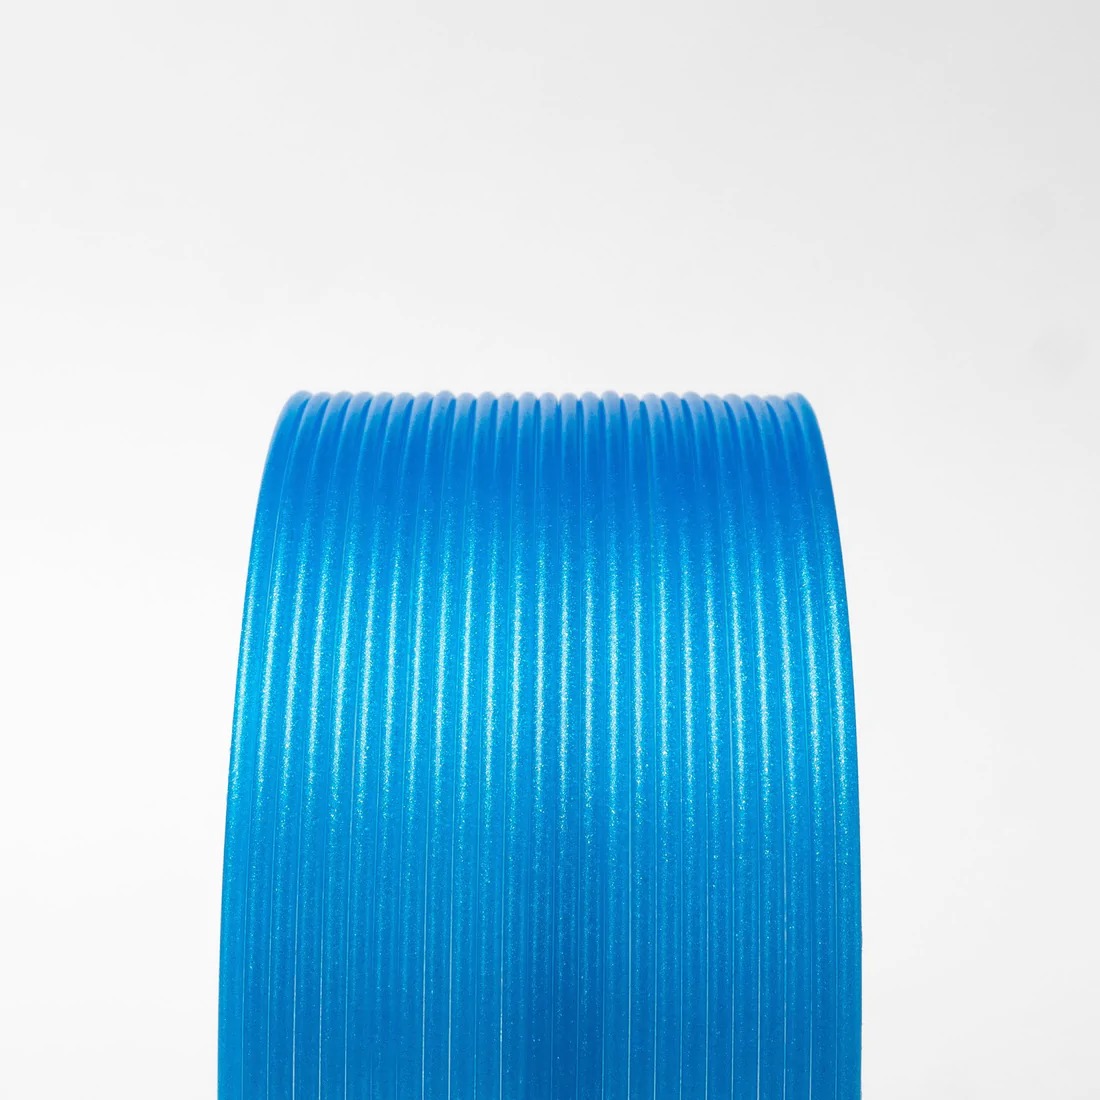 Glitter Flake HTPLA v2 - Winter Blue 1.75mm 3D printing filament